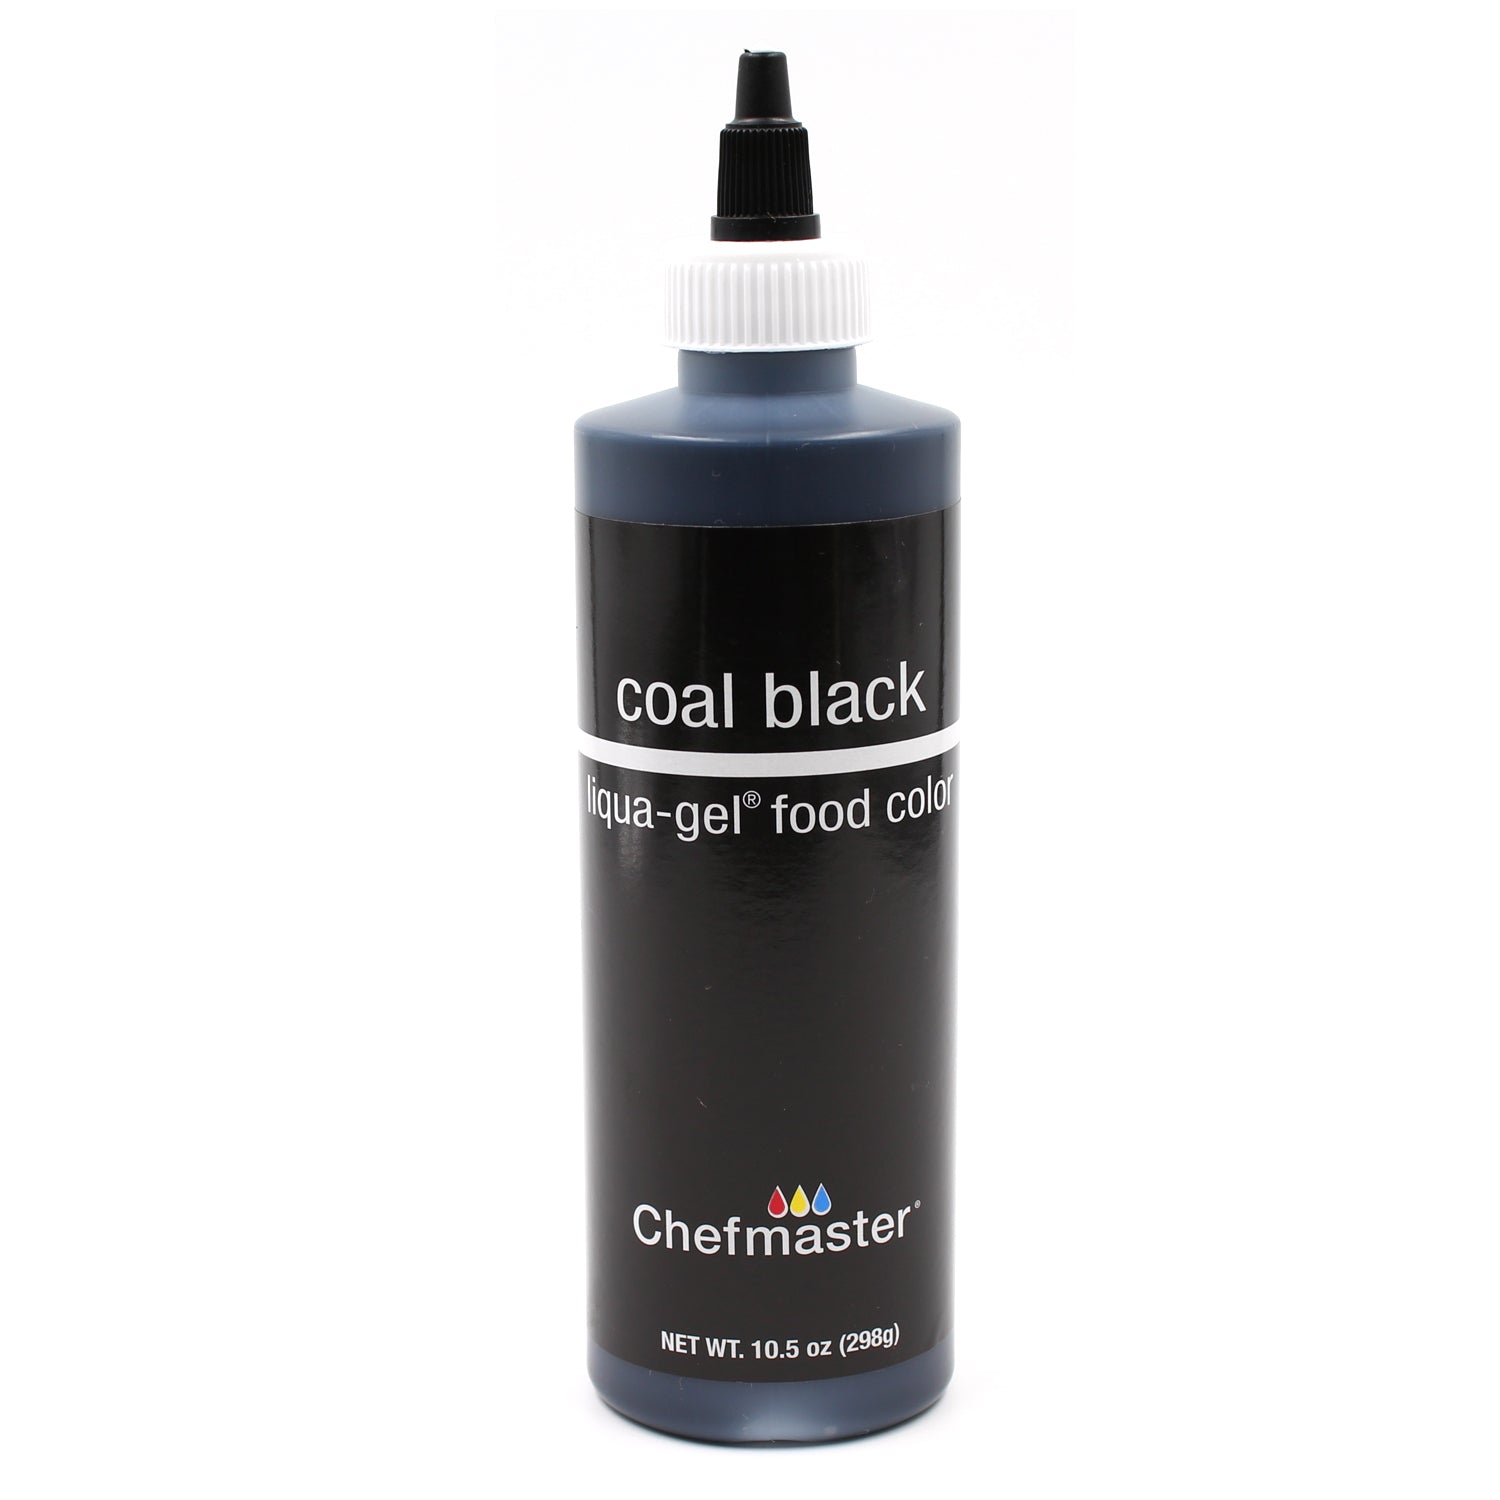 Chefmaster Liqua-Gel Coal Black 10.5oz/298g